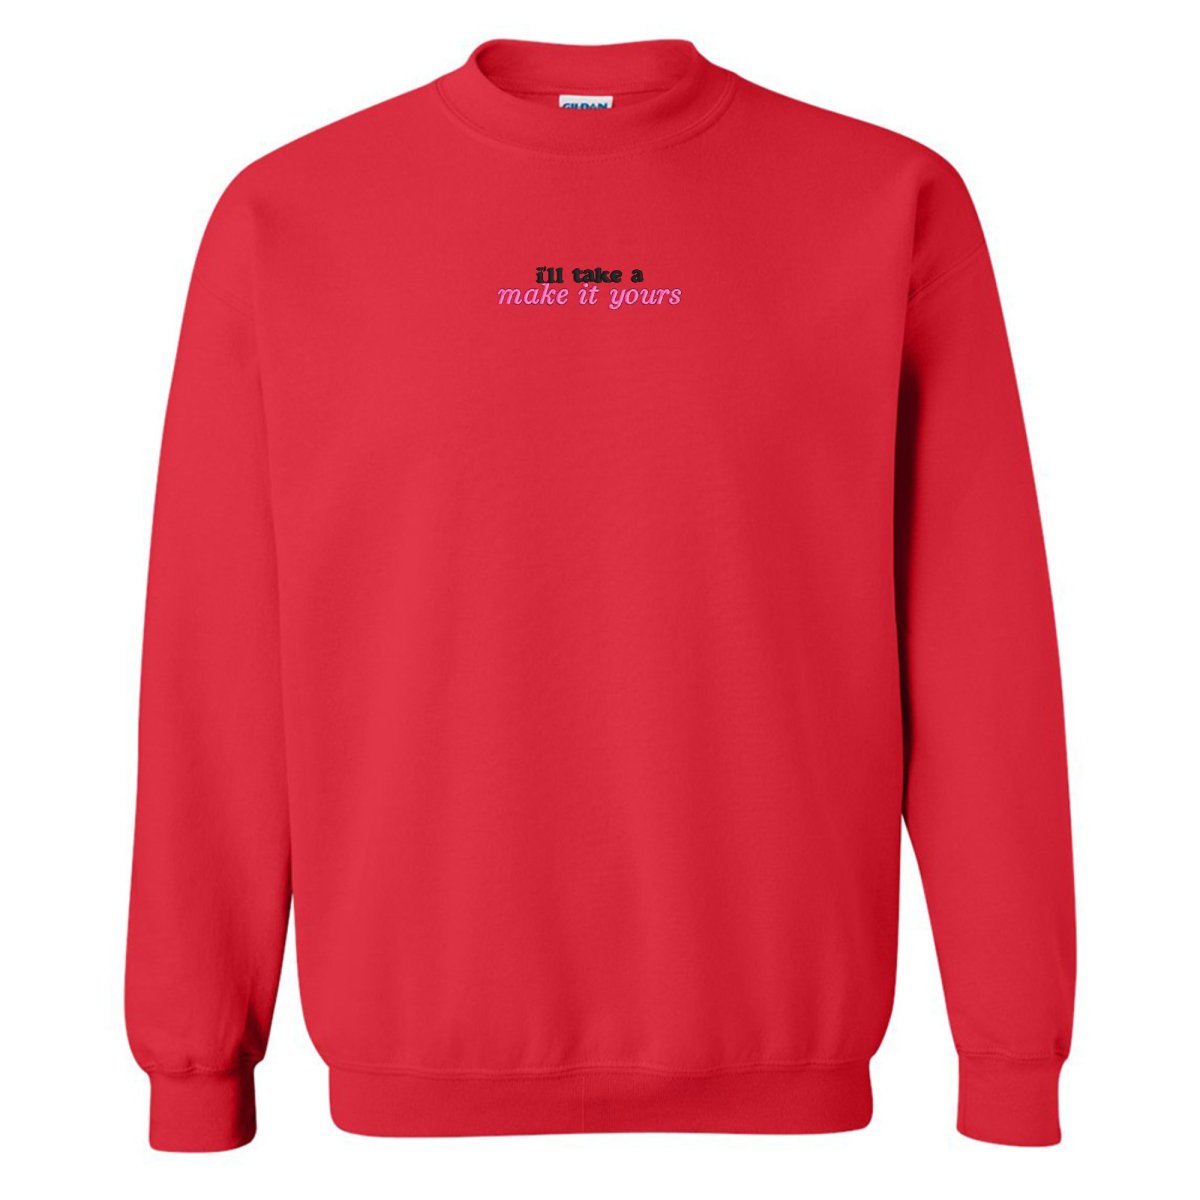 Make It Yours™ 'I'll Just Have' Crewneck Sweatshirt - United Monograms